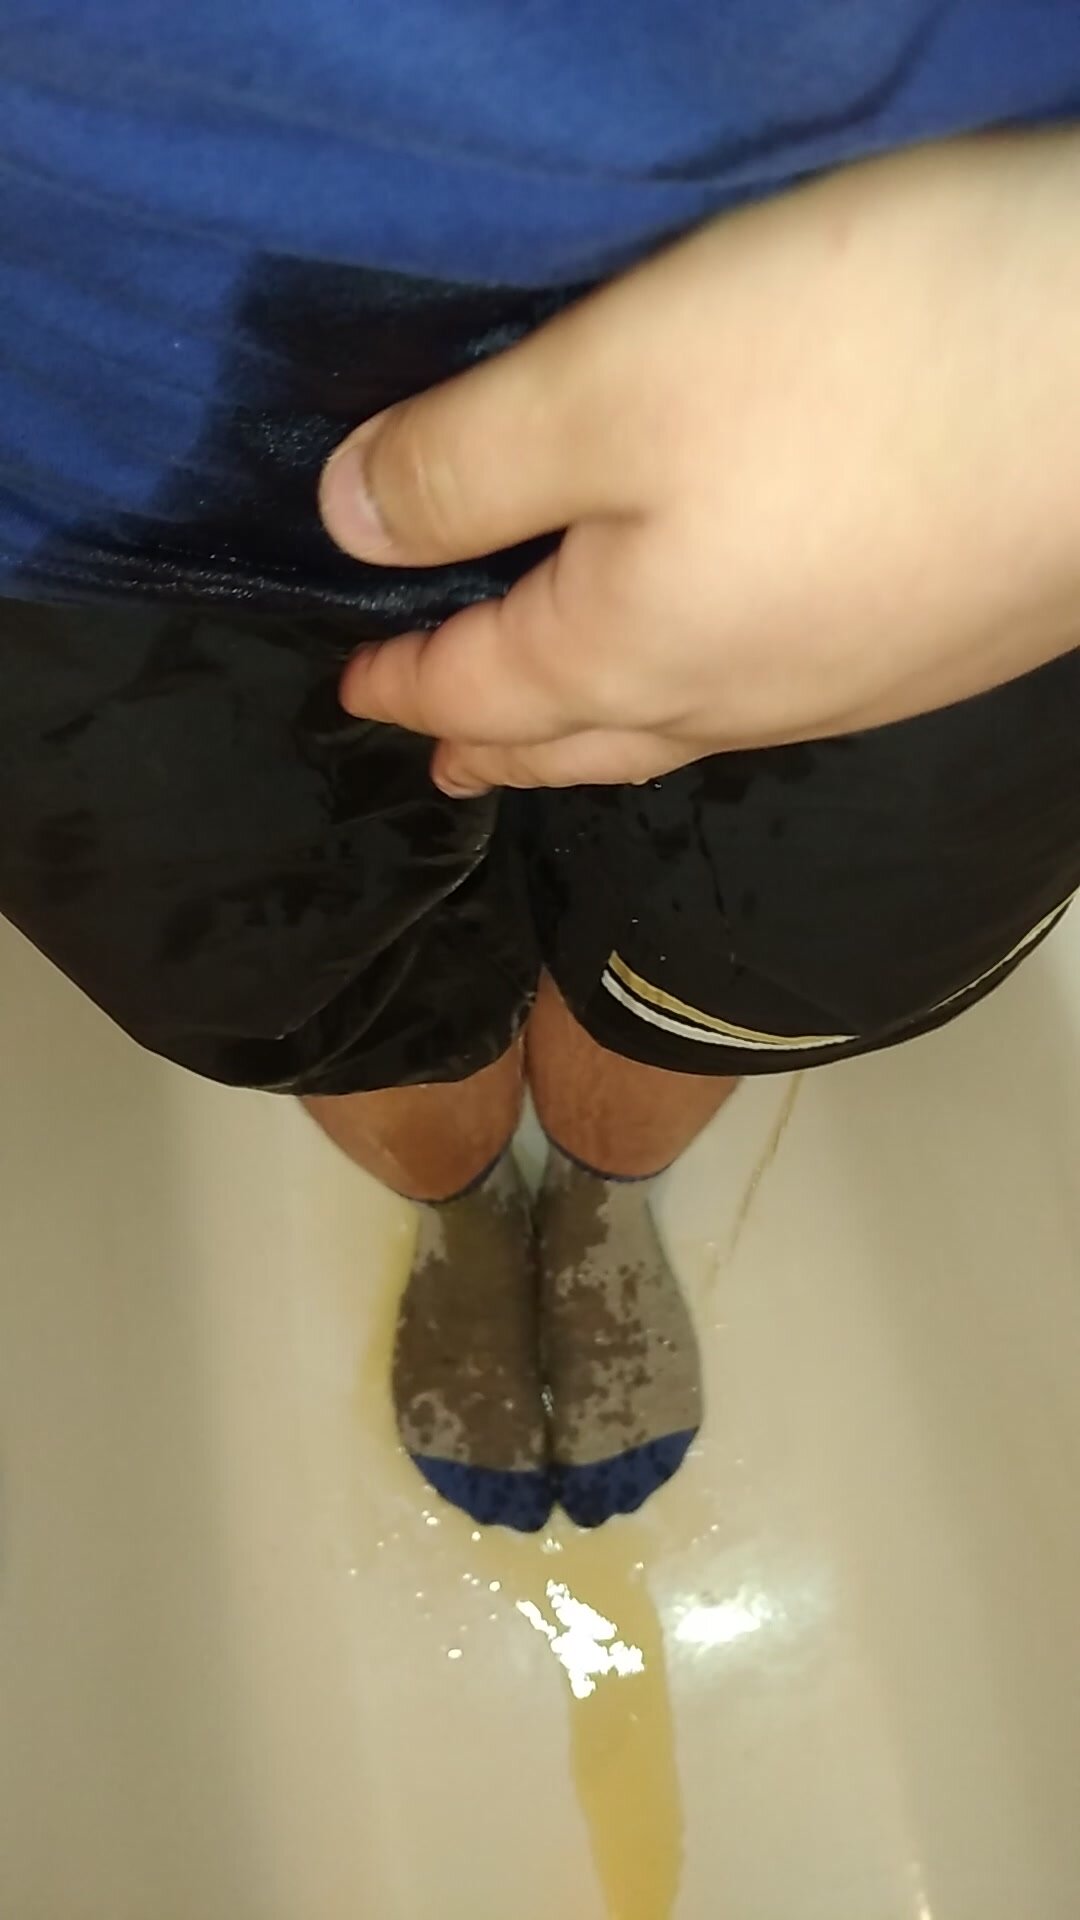 Wetting my black shorts and grey socks